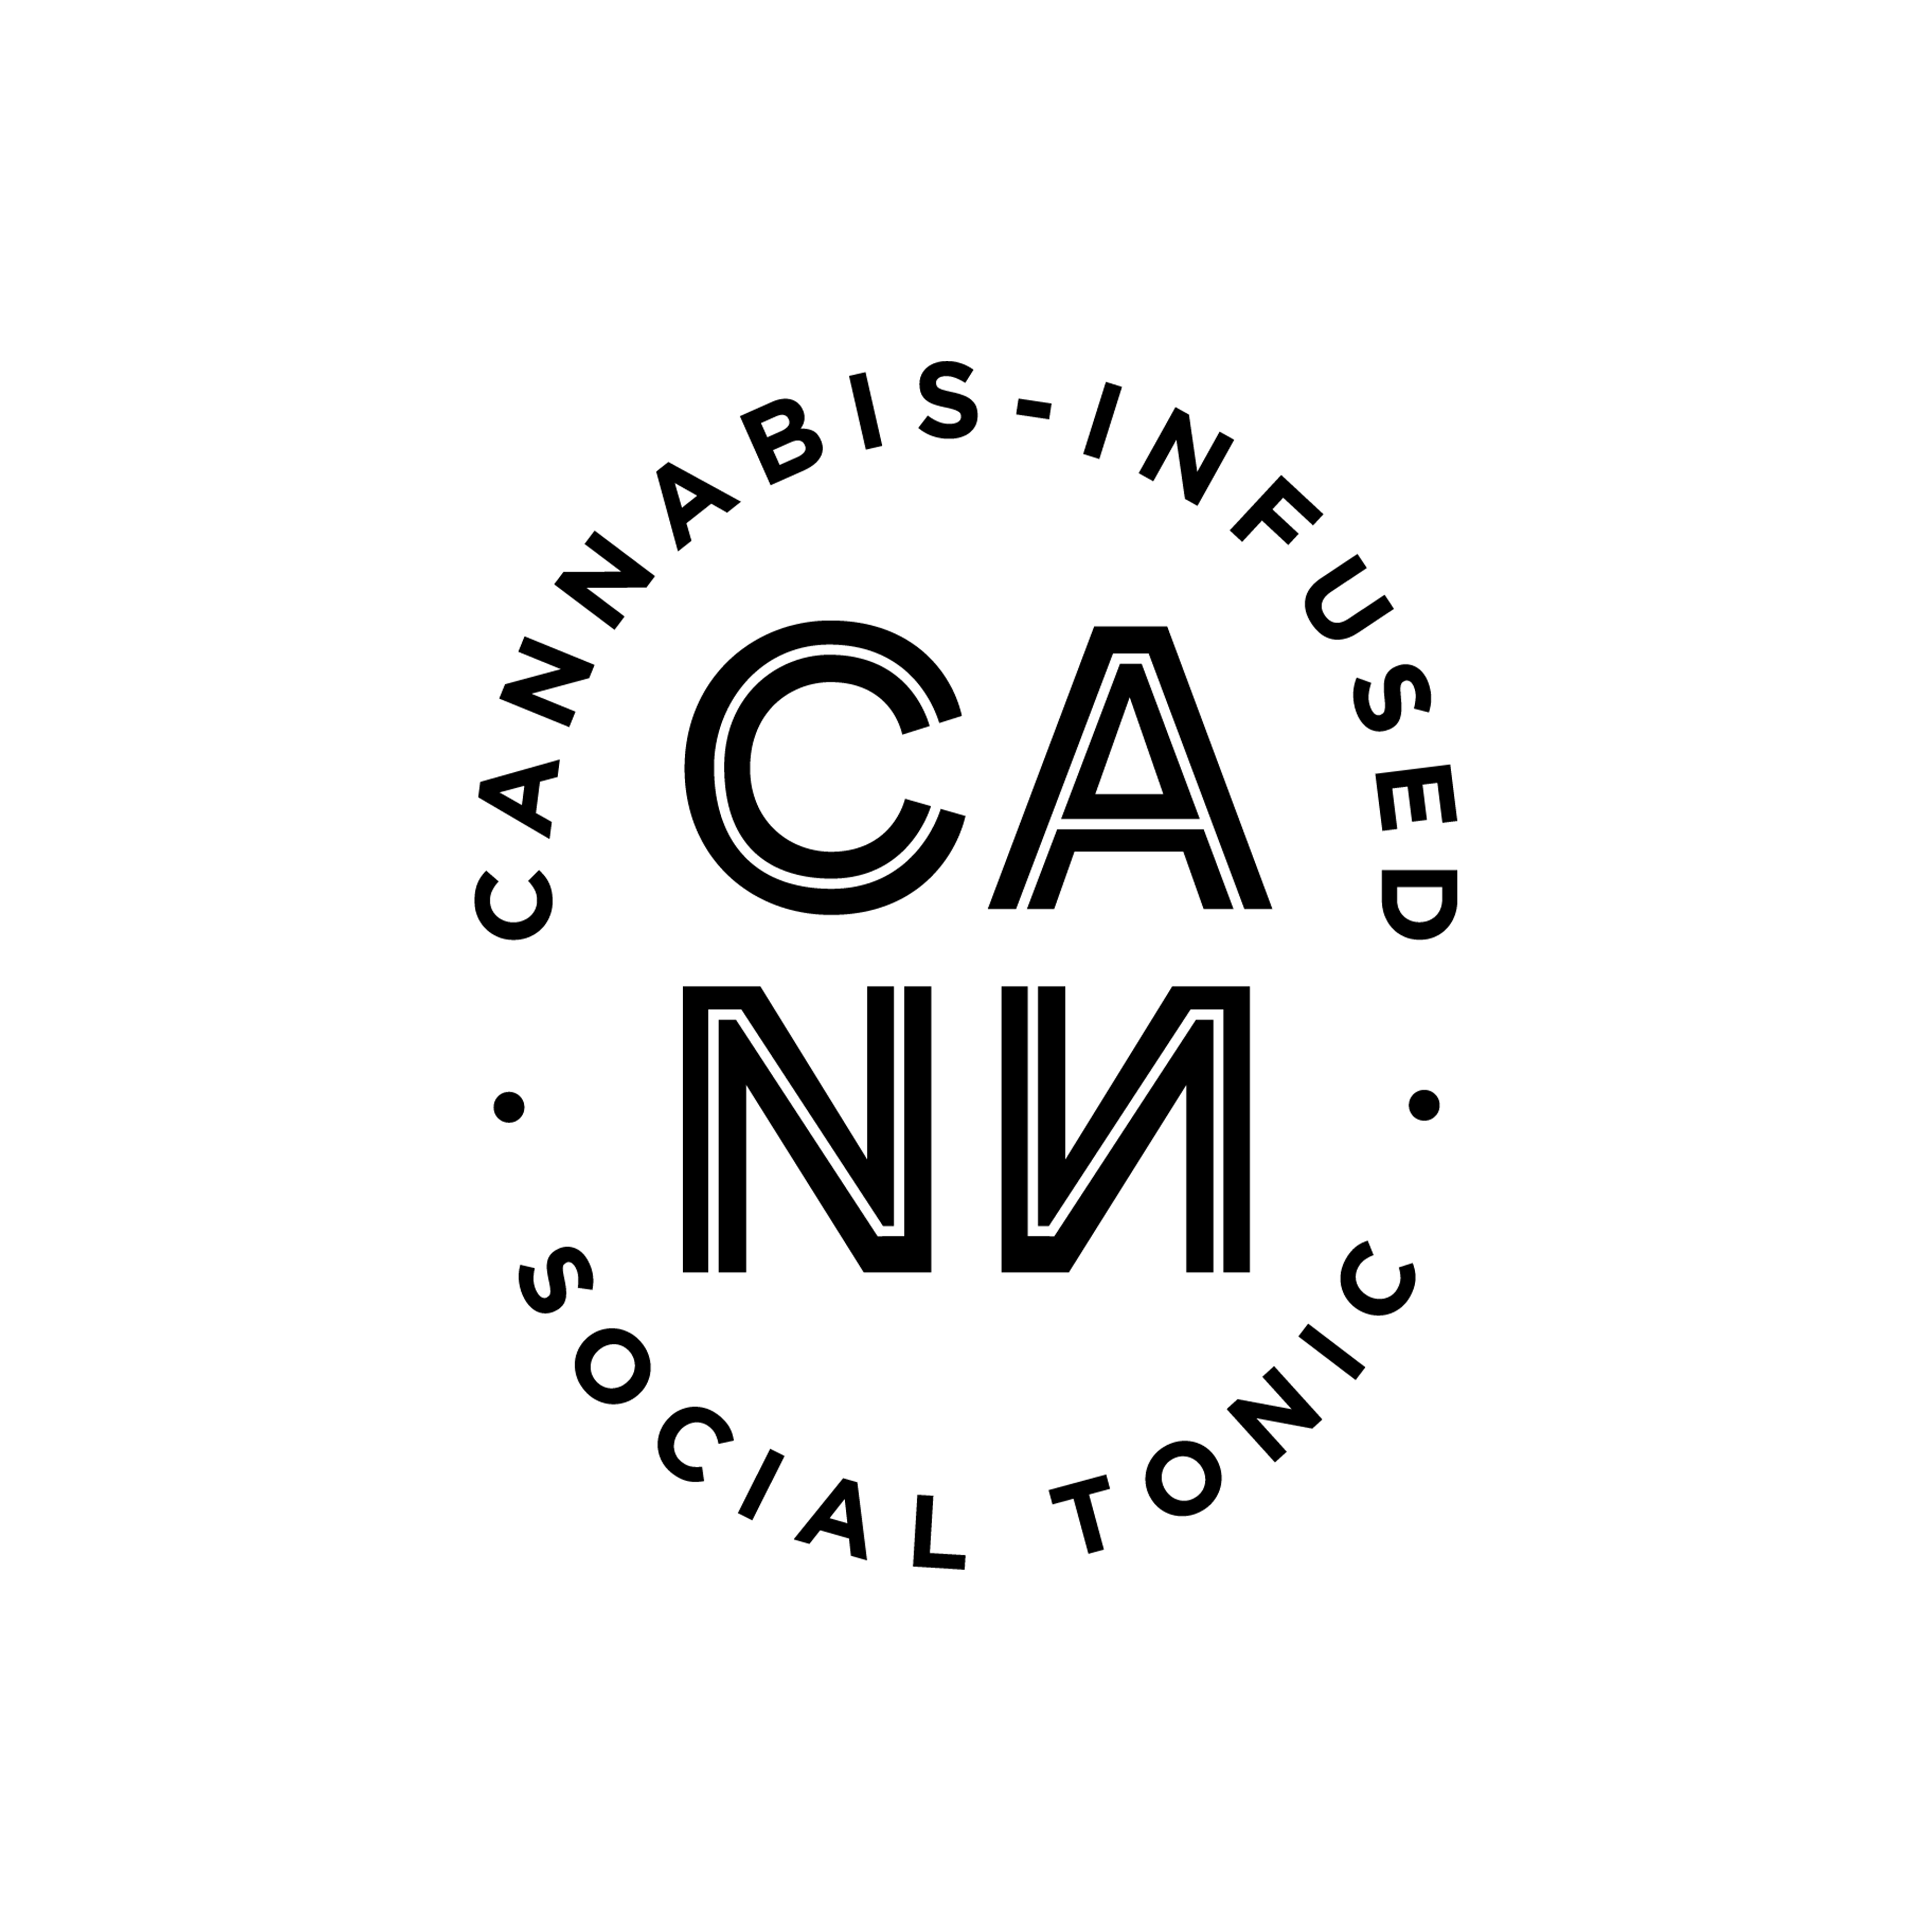 The logo of CANN